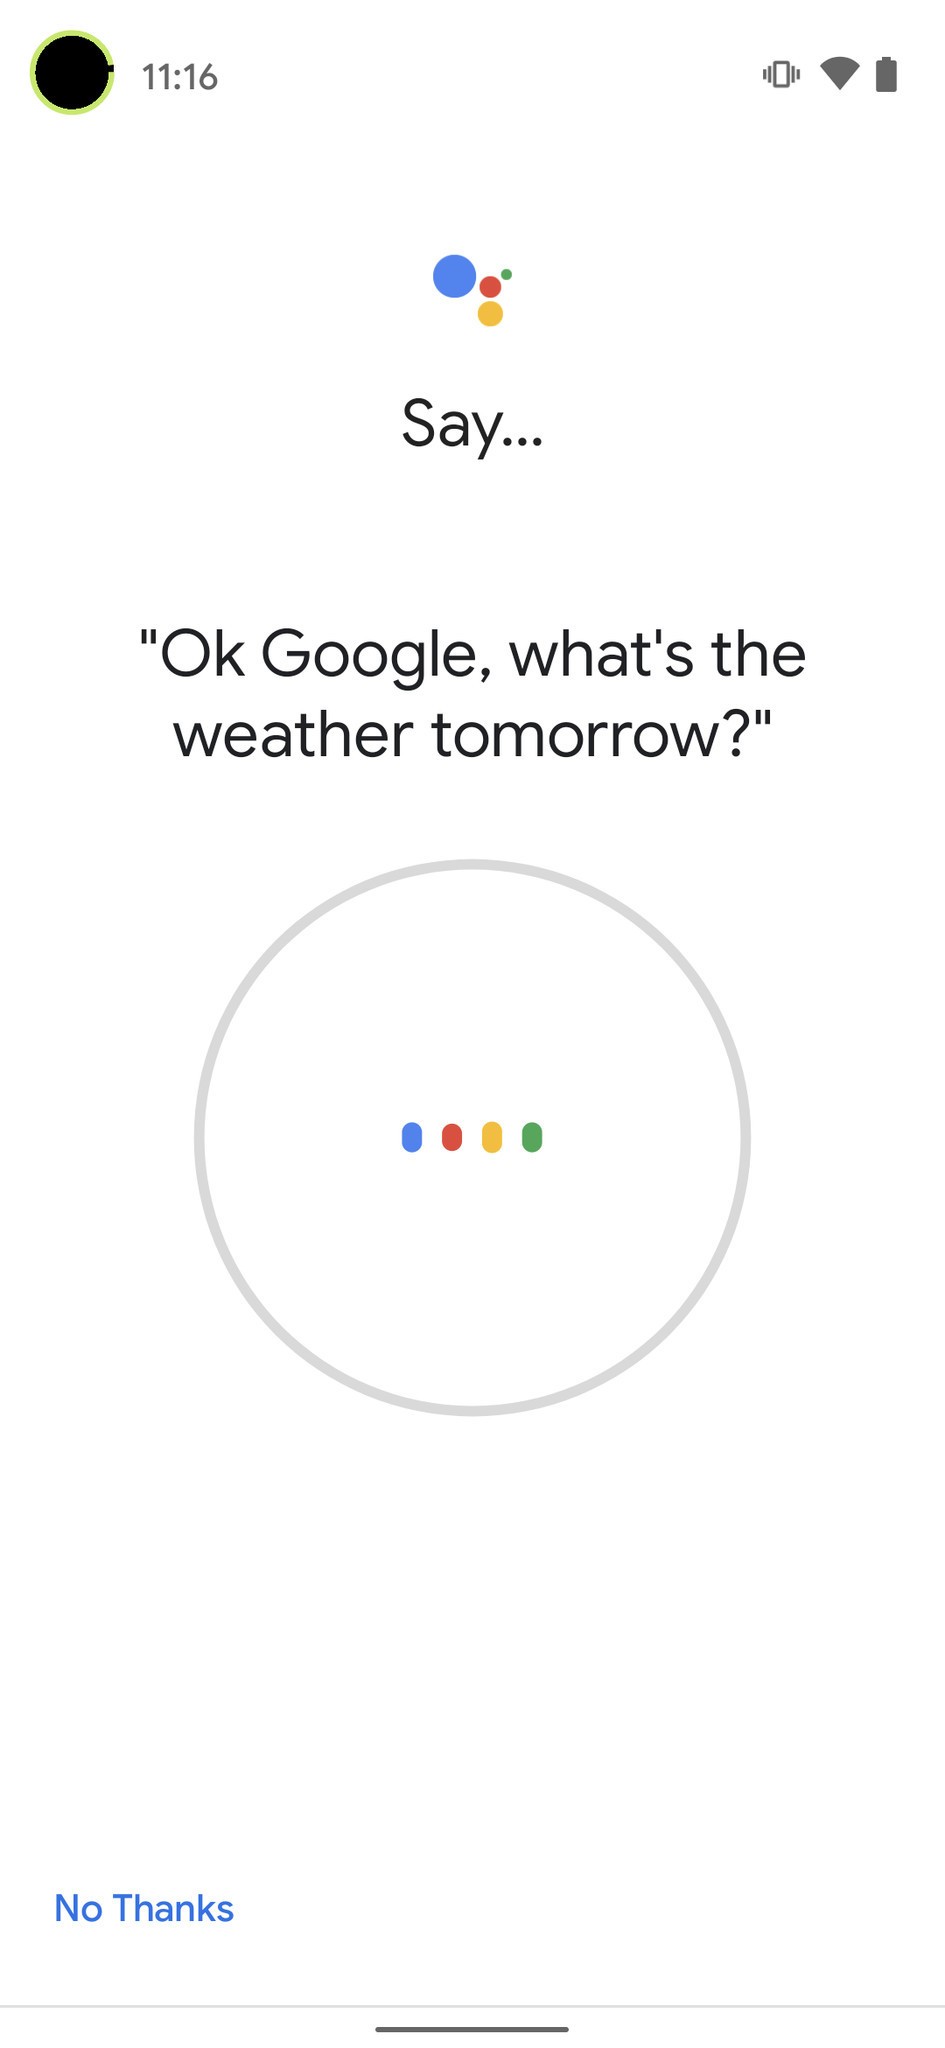 Bật tính năng Voice Match của Google Assistant